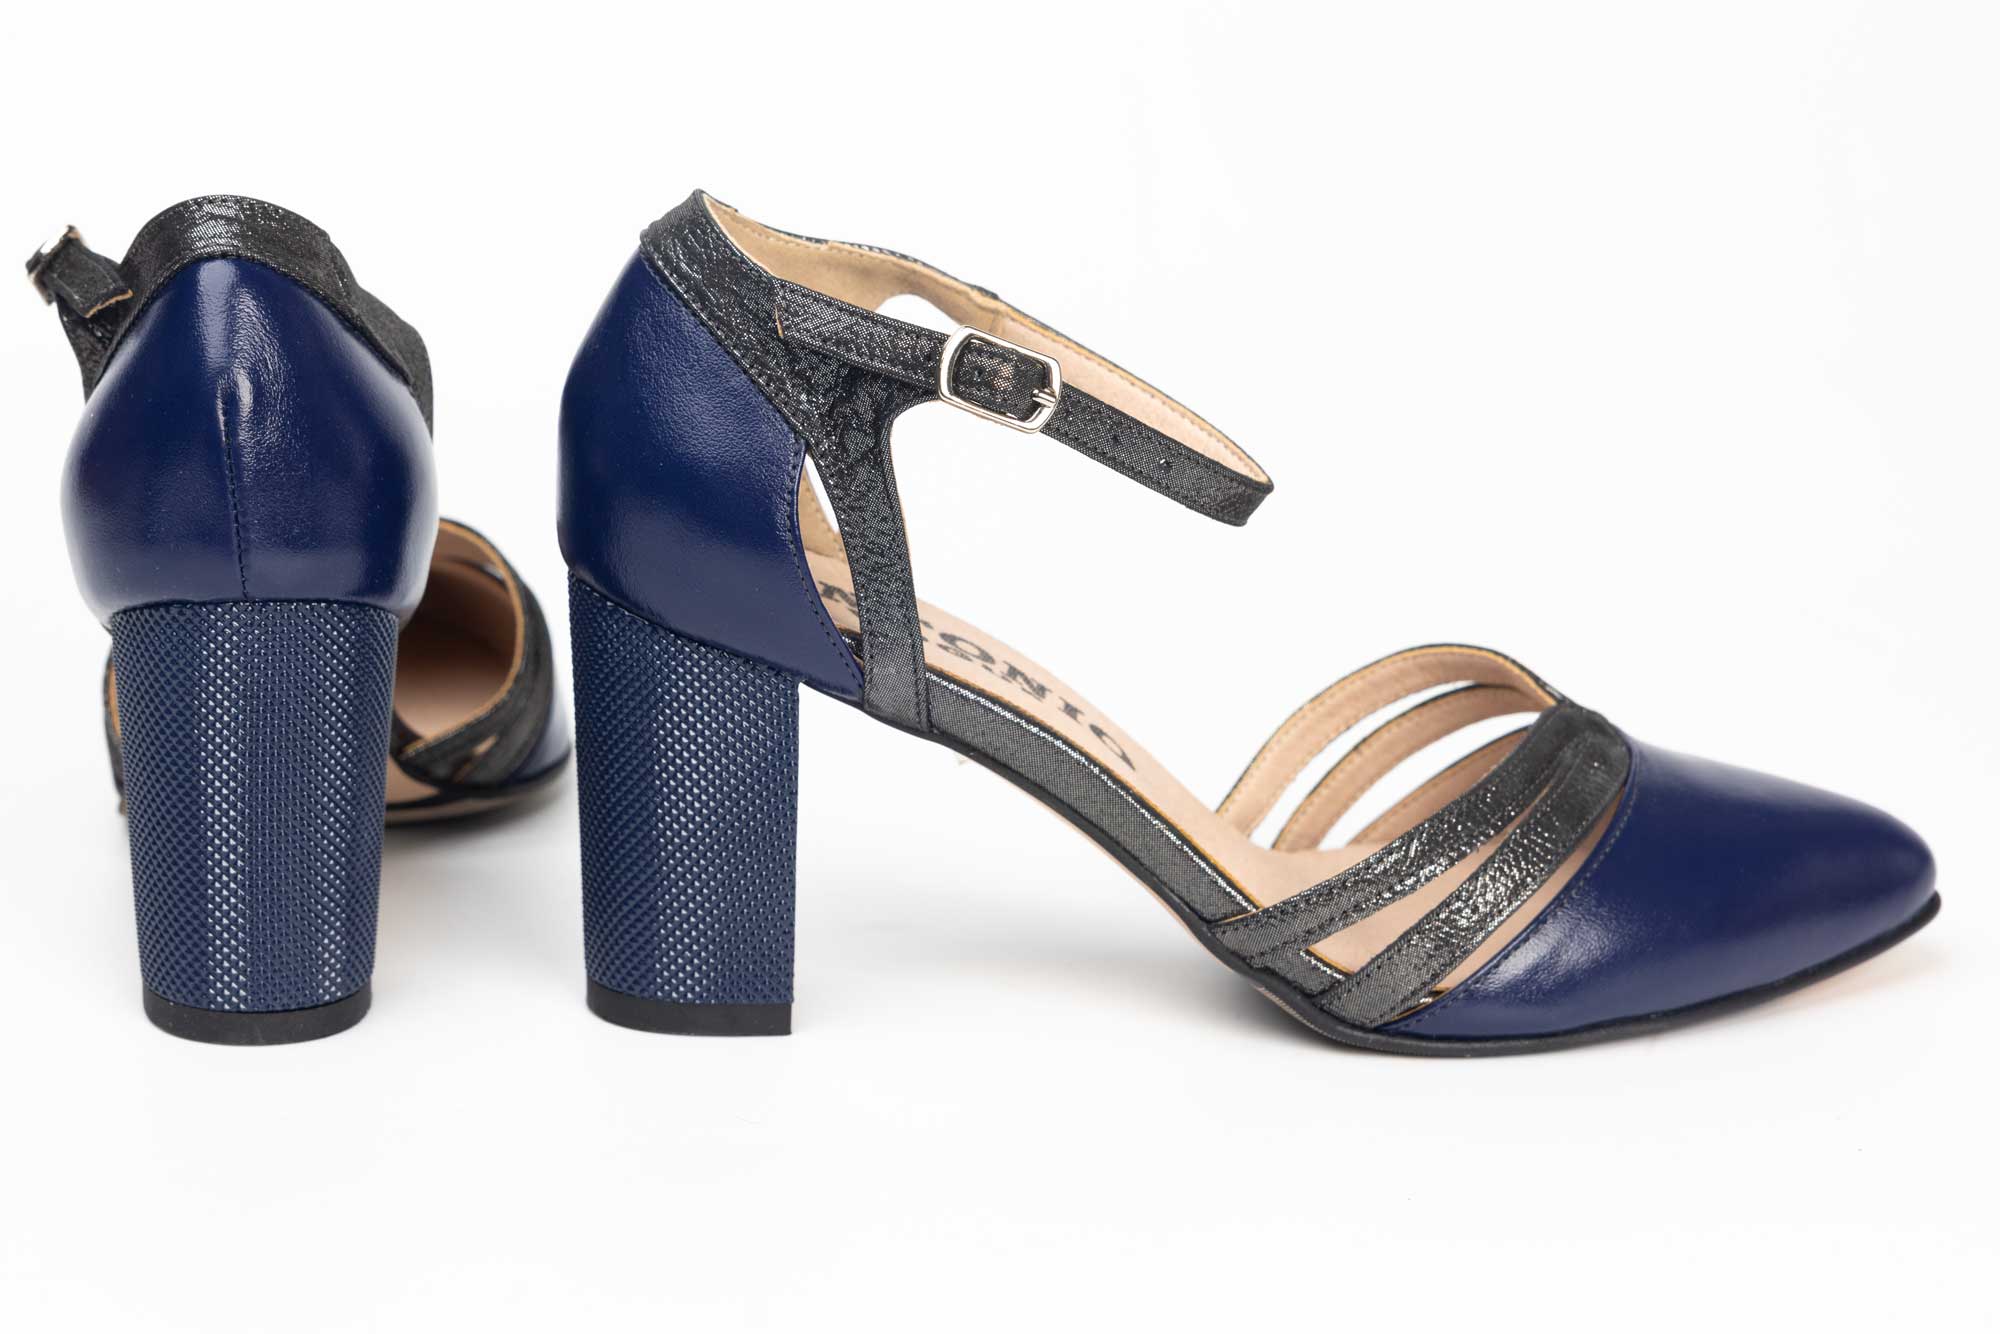 Pantofi dama decupati din piele naturala ANTONIO 34216 bleu petrol